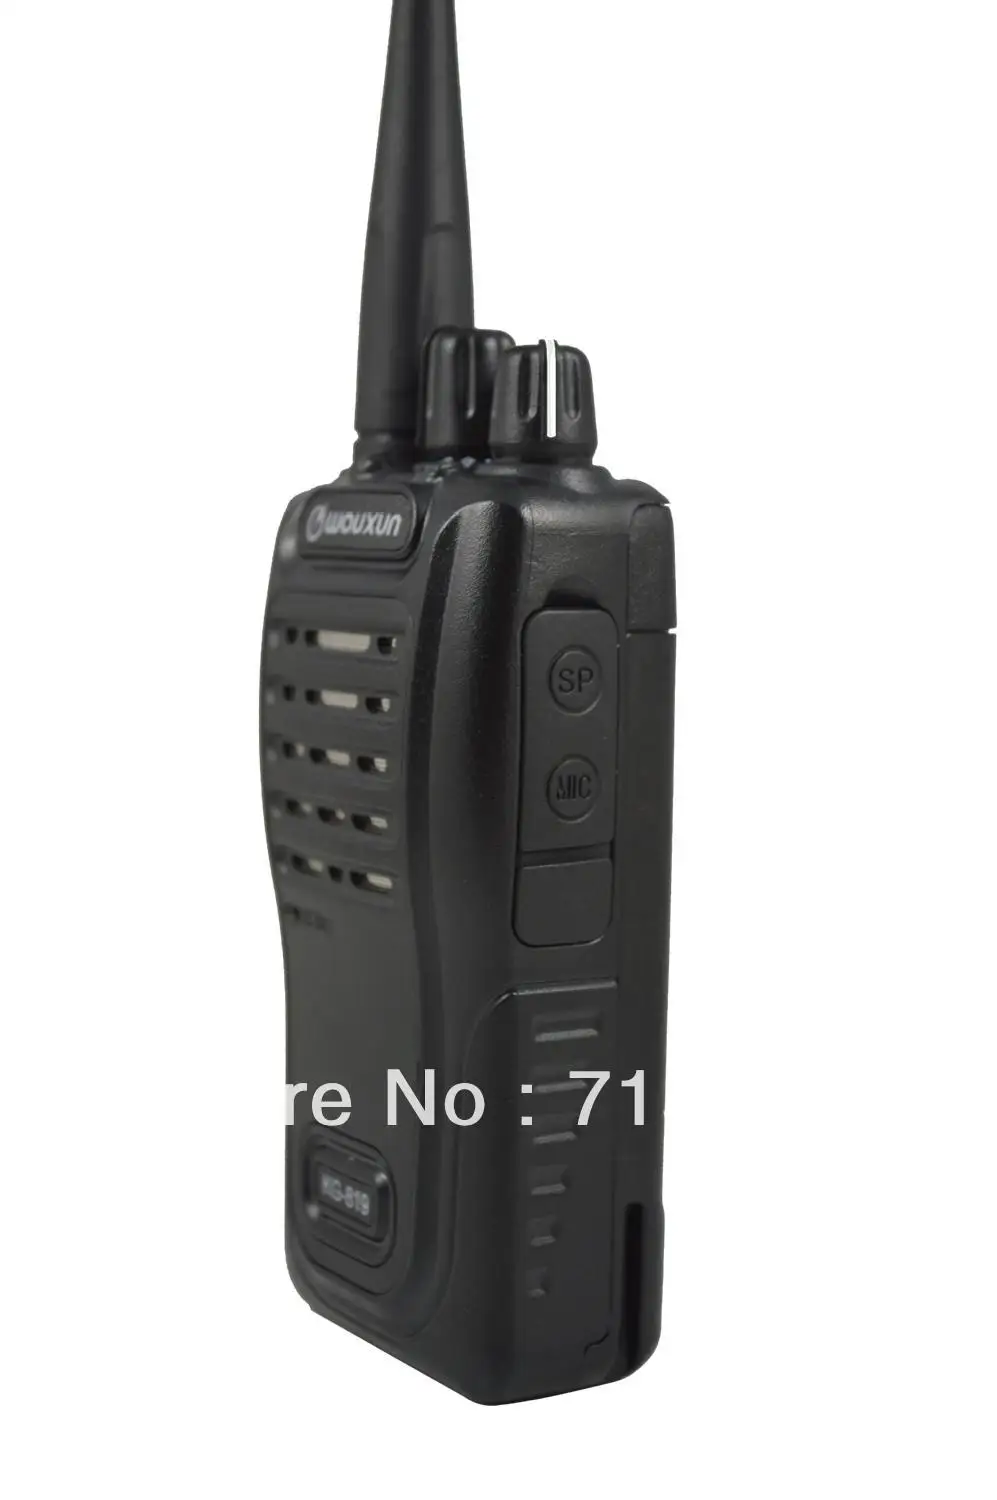 WOUXUN KG-819 UHF 400-470 MHz 4 W 16CH двухстороннее радио